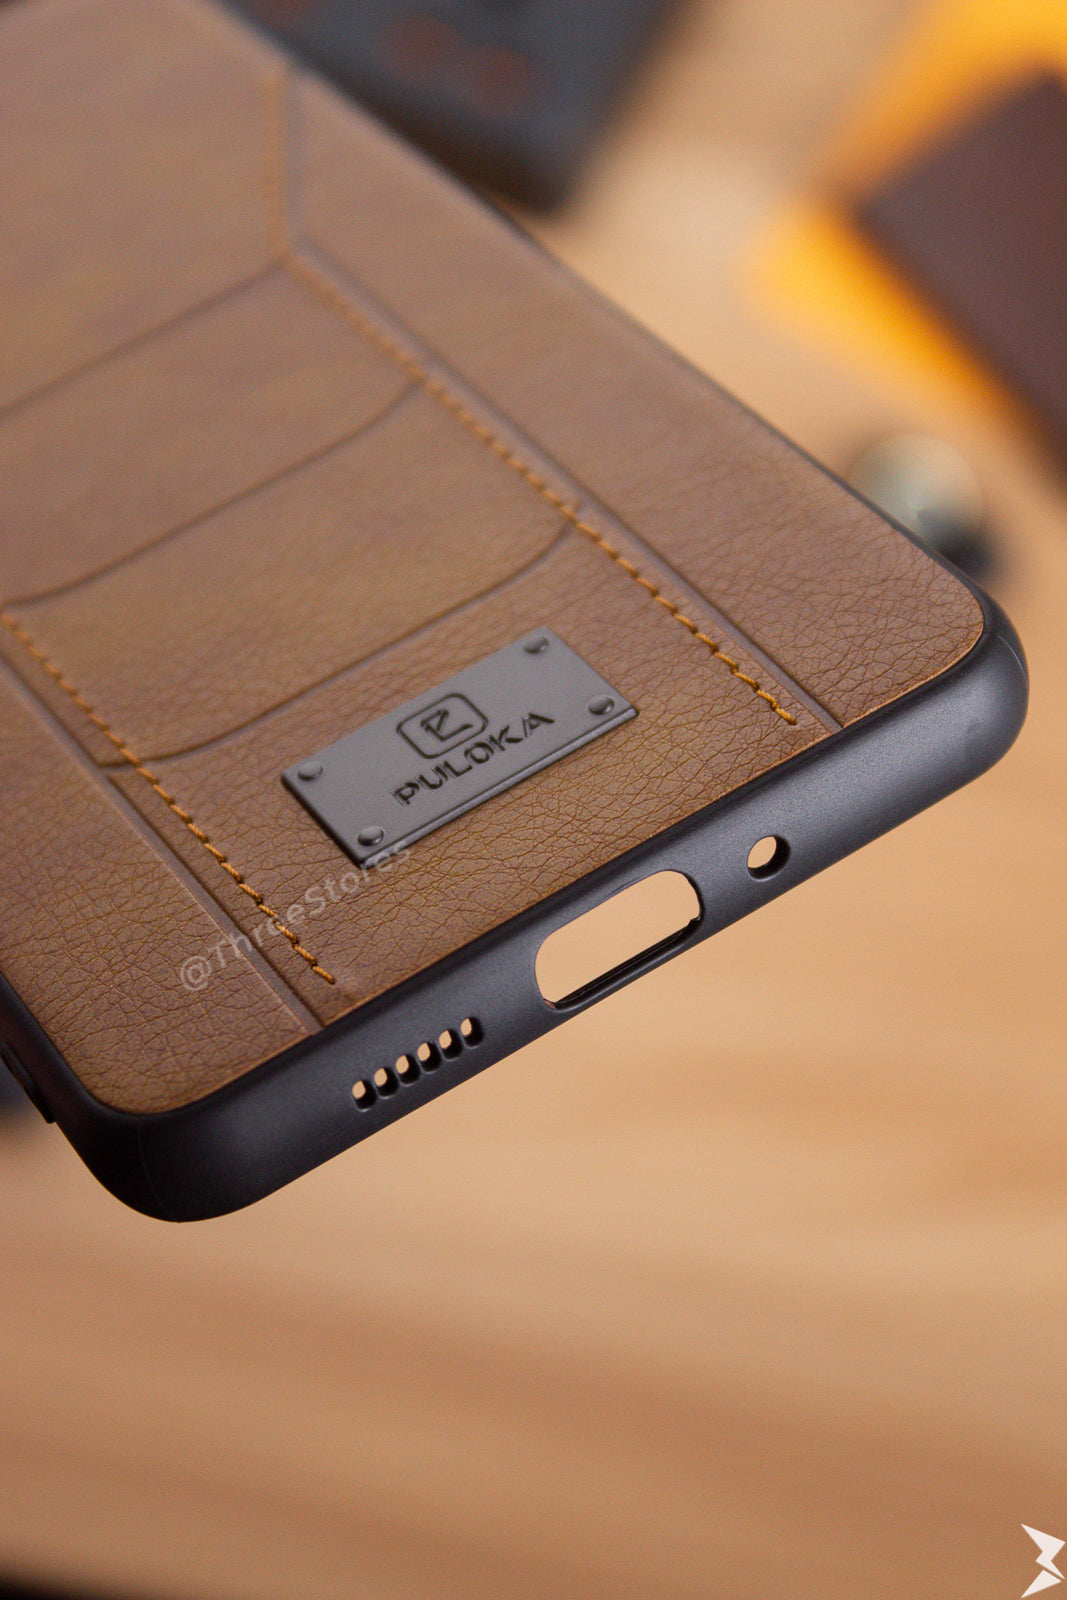 Puloka Original Leather Case Samsung A53